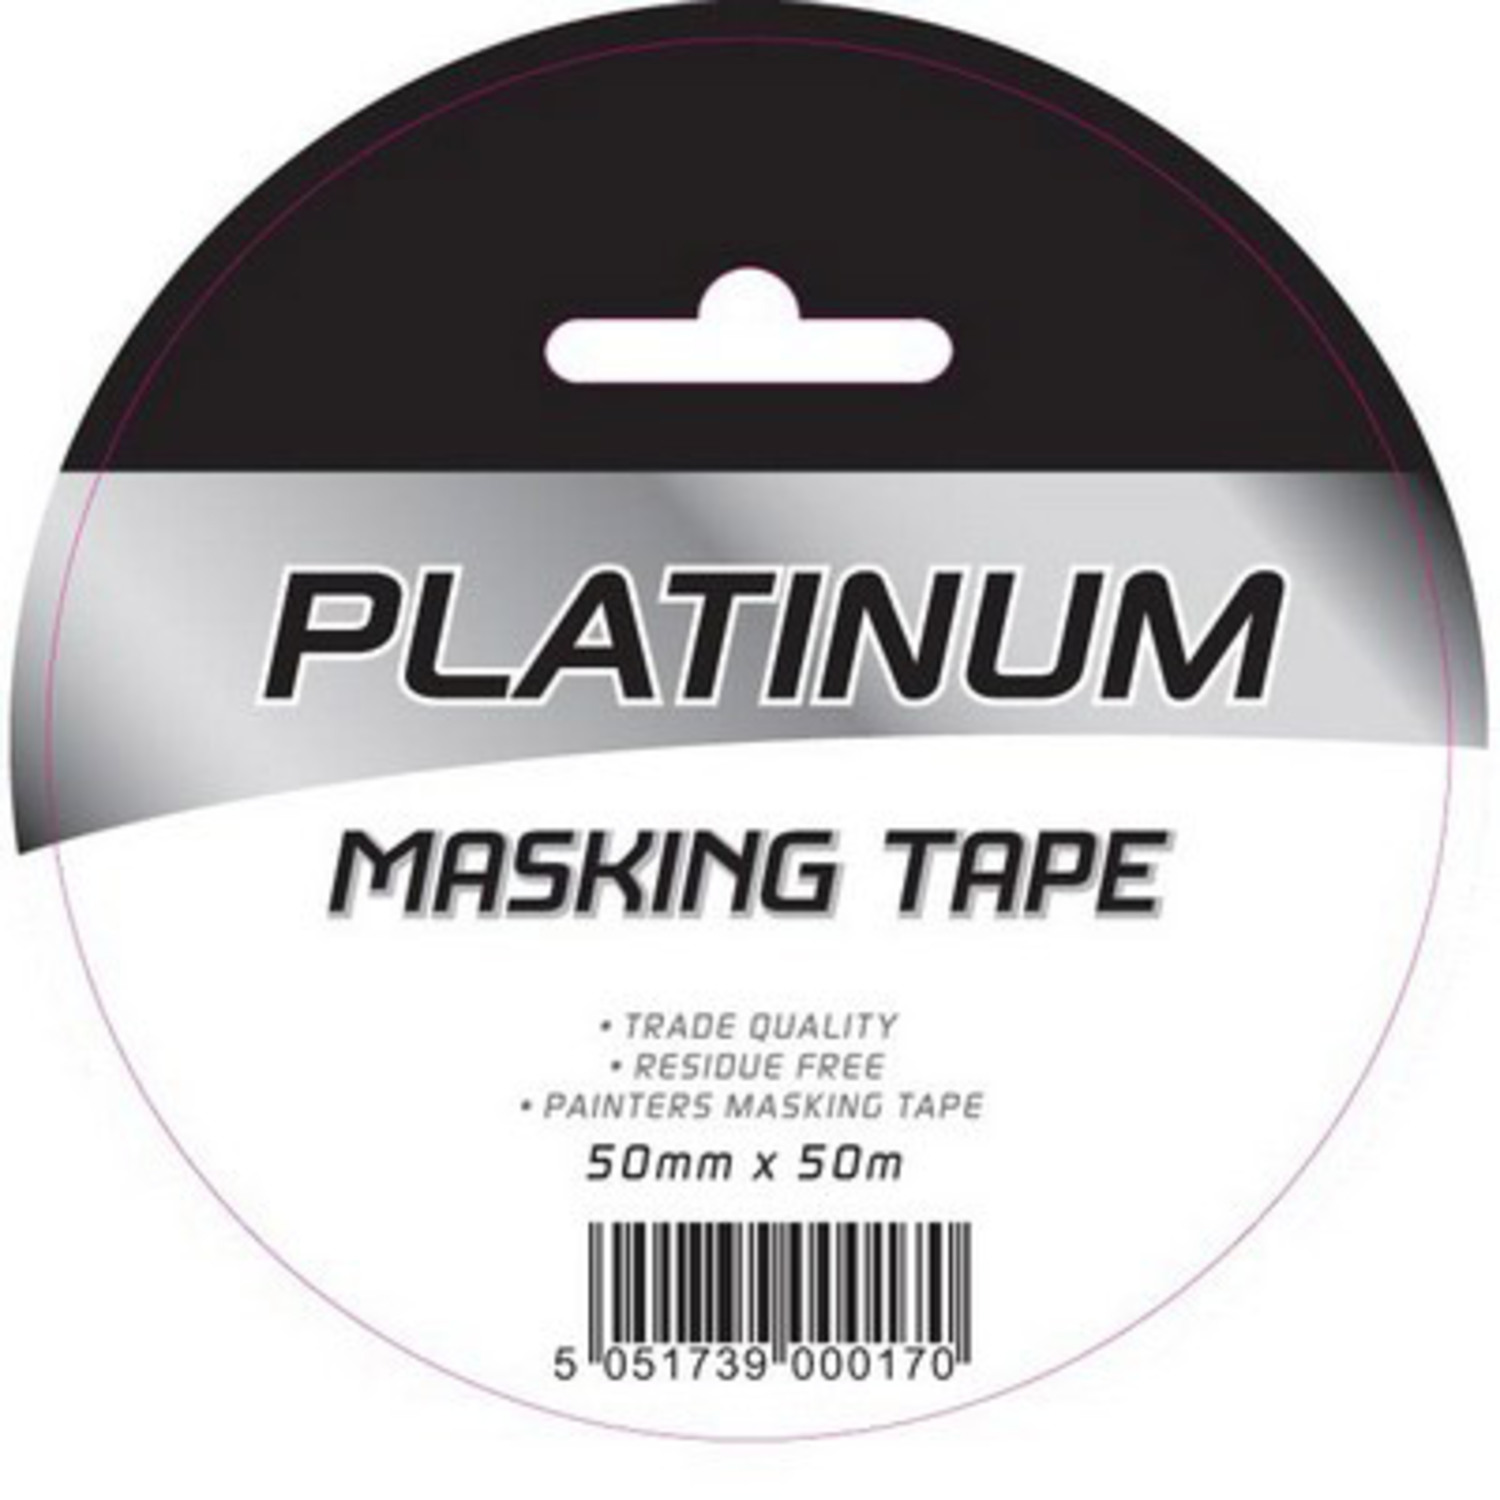 Ultratape 50m x 50mm Platinum Masking Tape Image